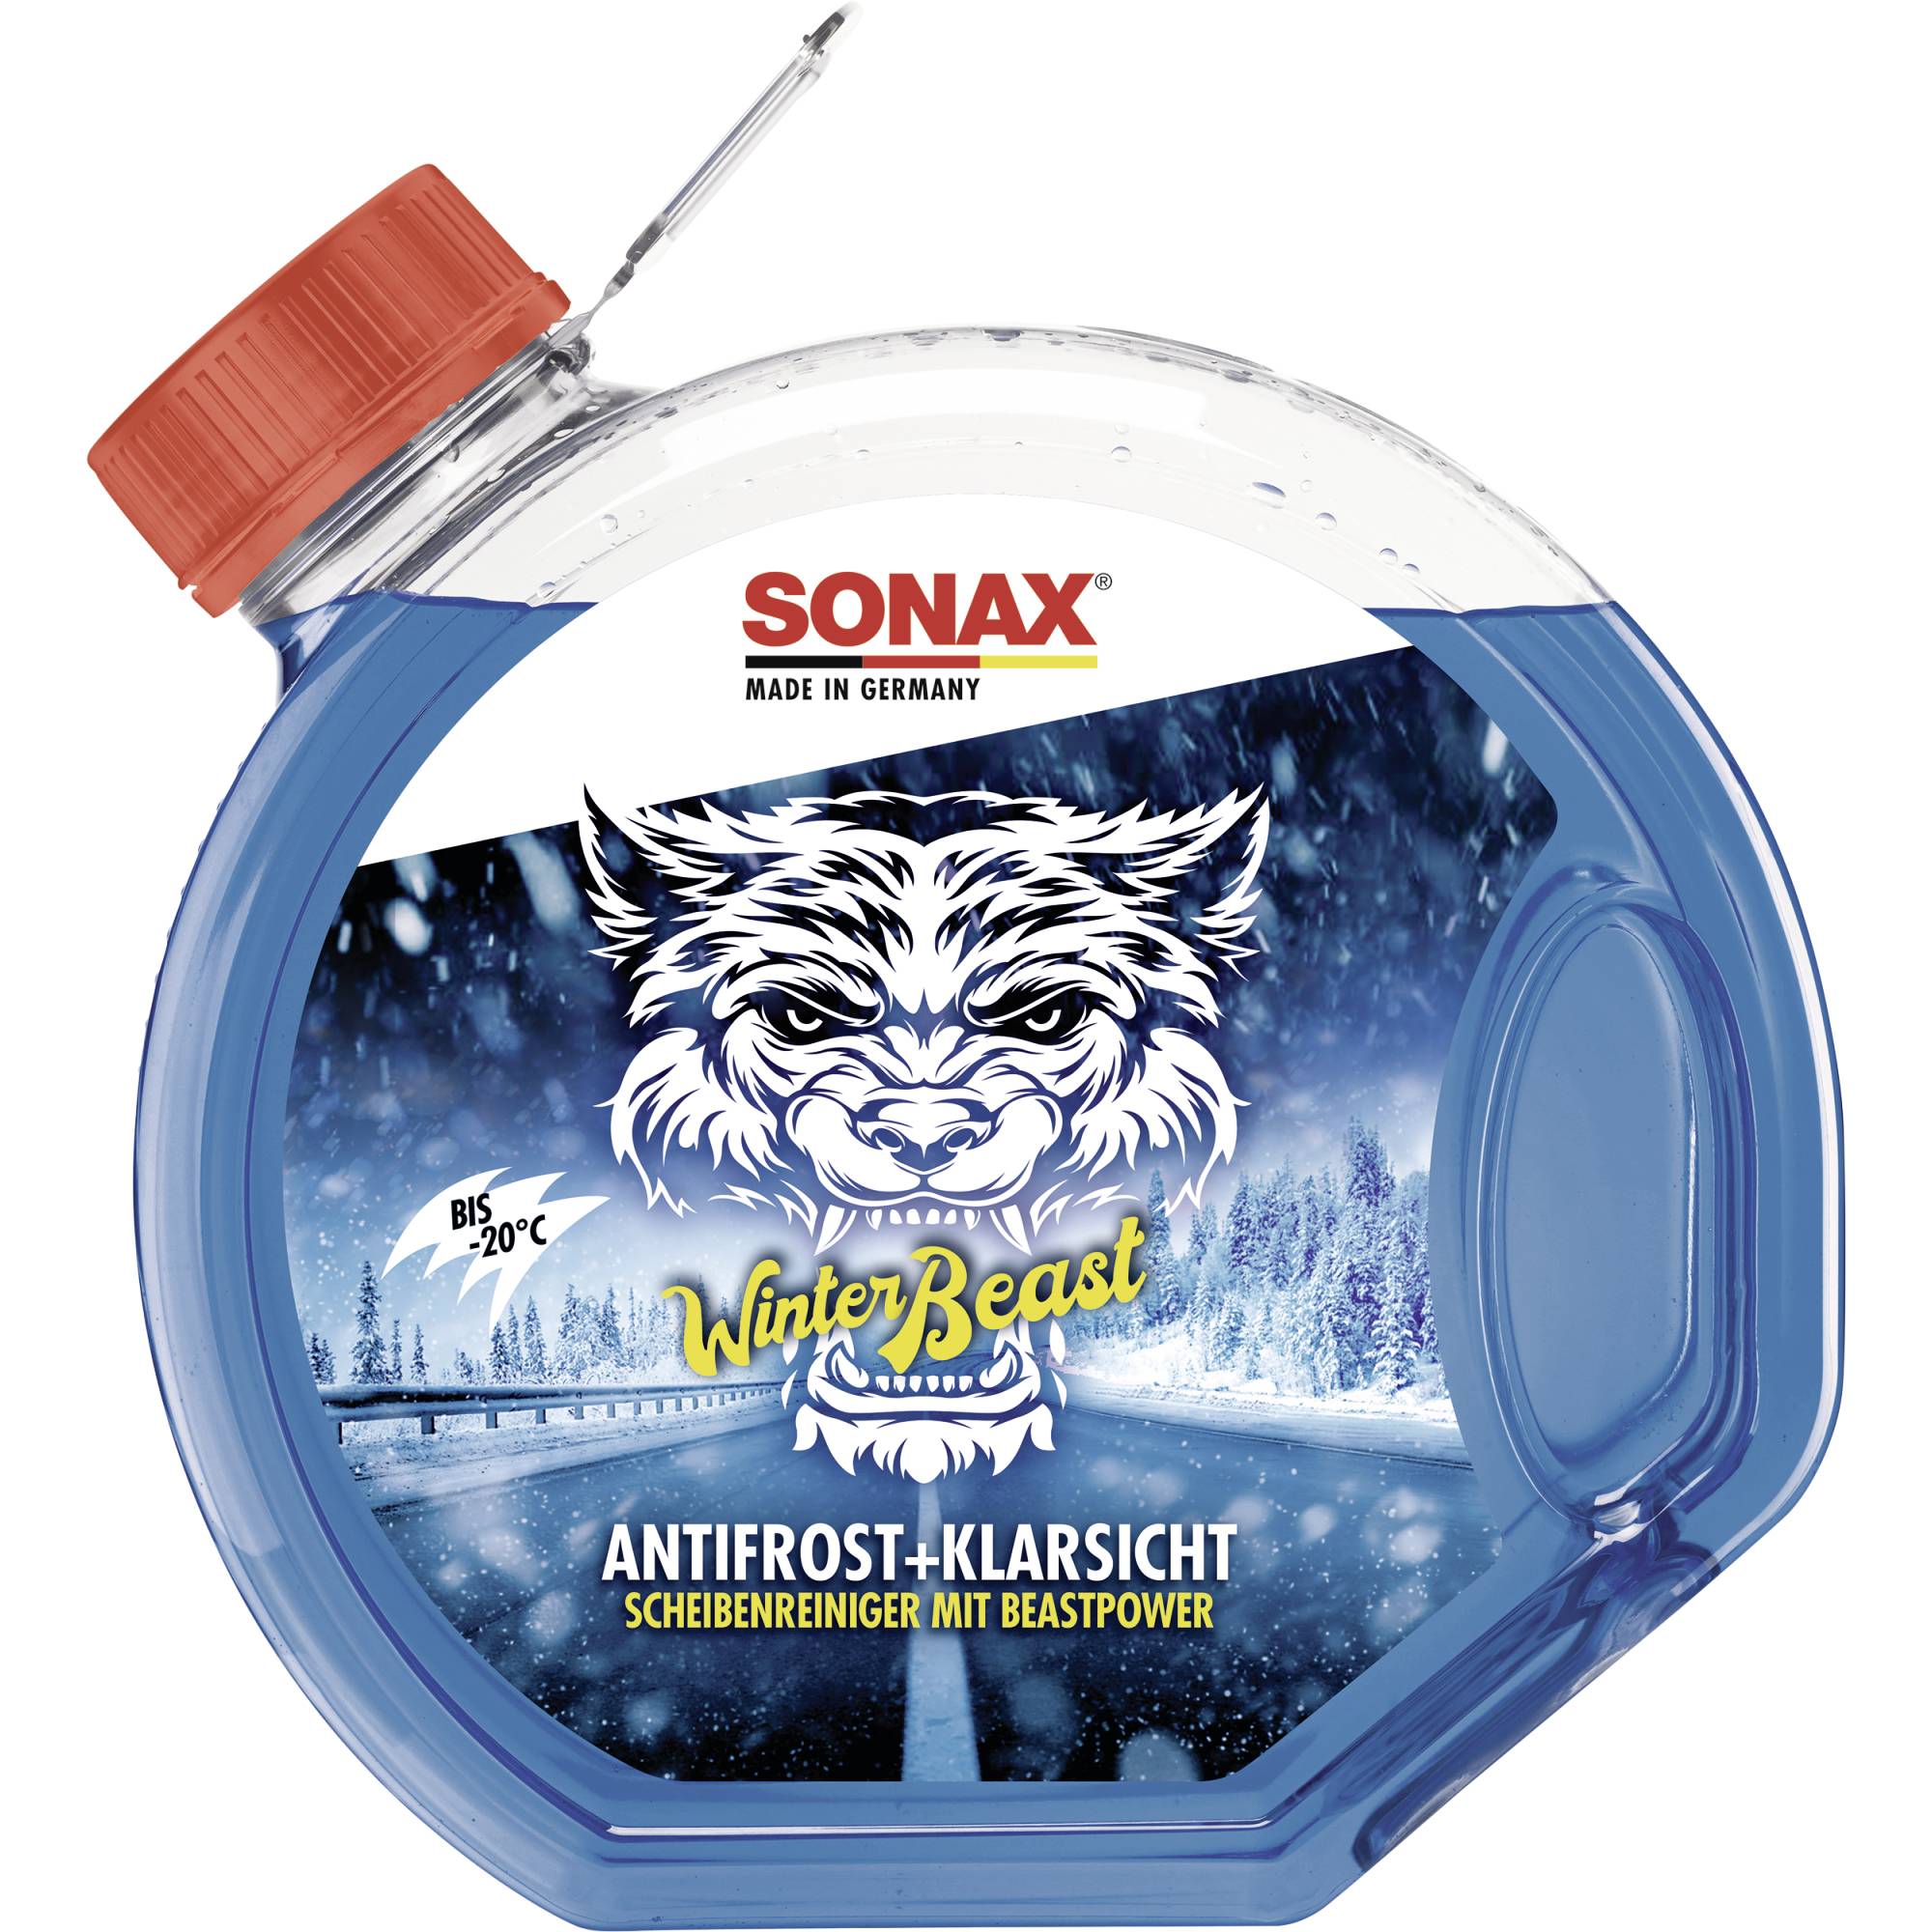 Sonax WinterBeast AntiFrost + KlarSicht 135400 Window antifreeze Windows 3 l